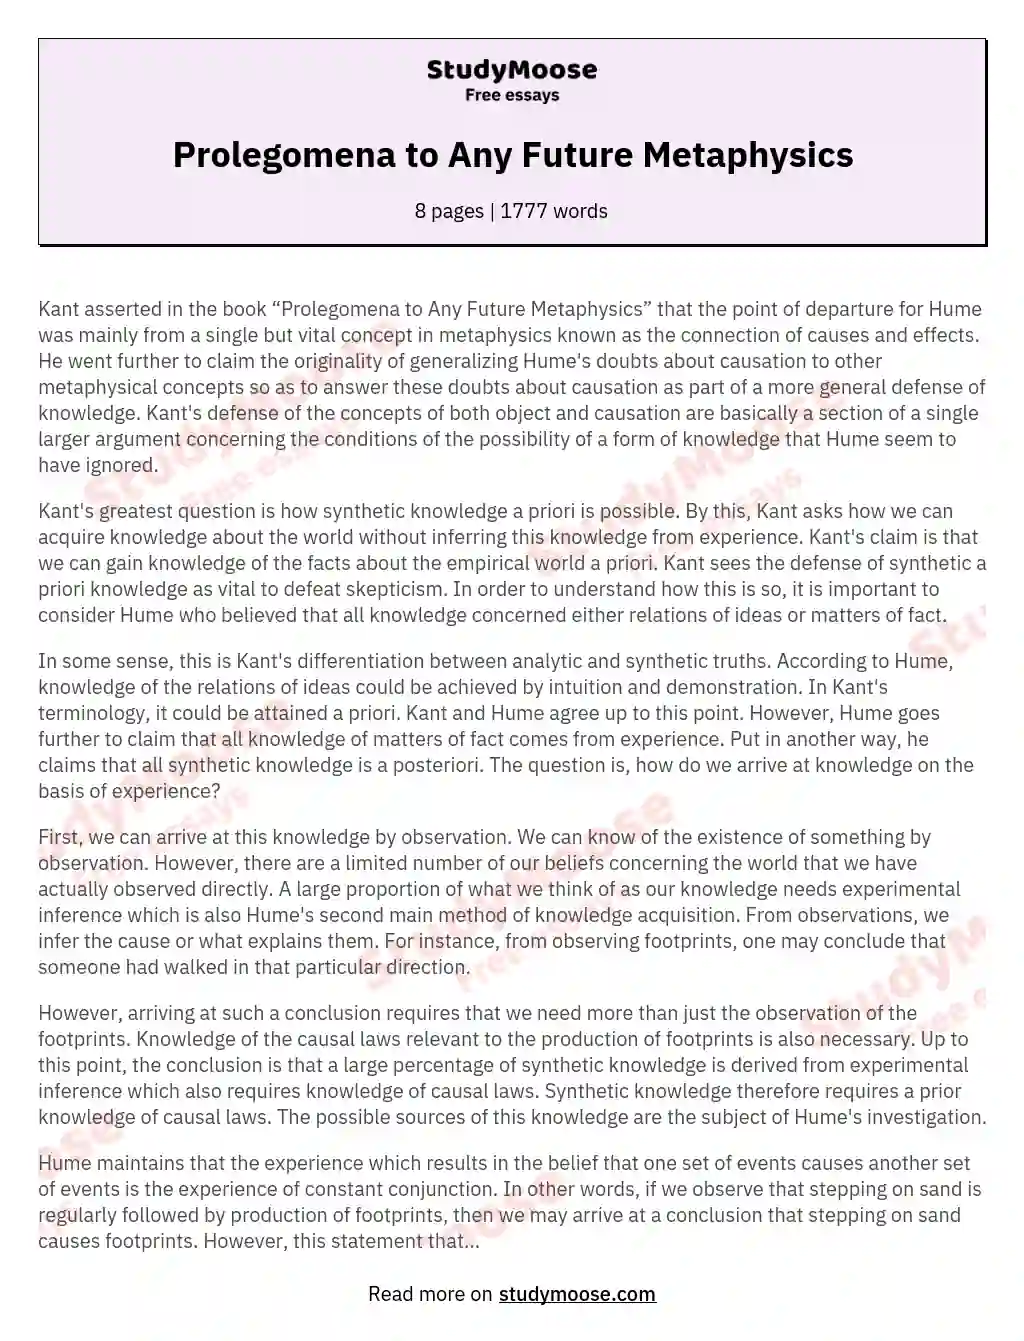 Prolegomena to Any Future Metaphysics essay